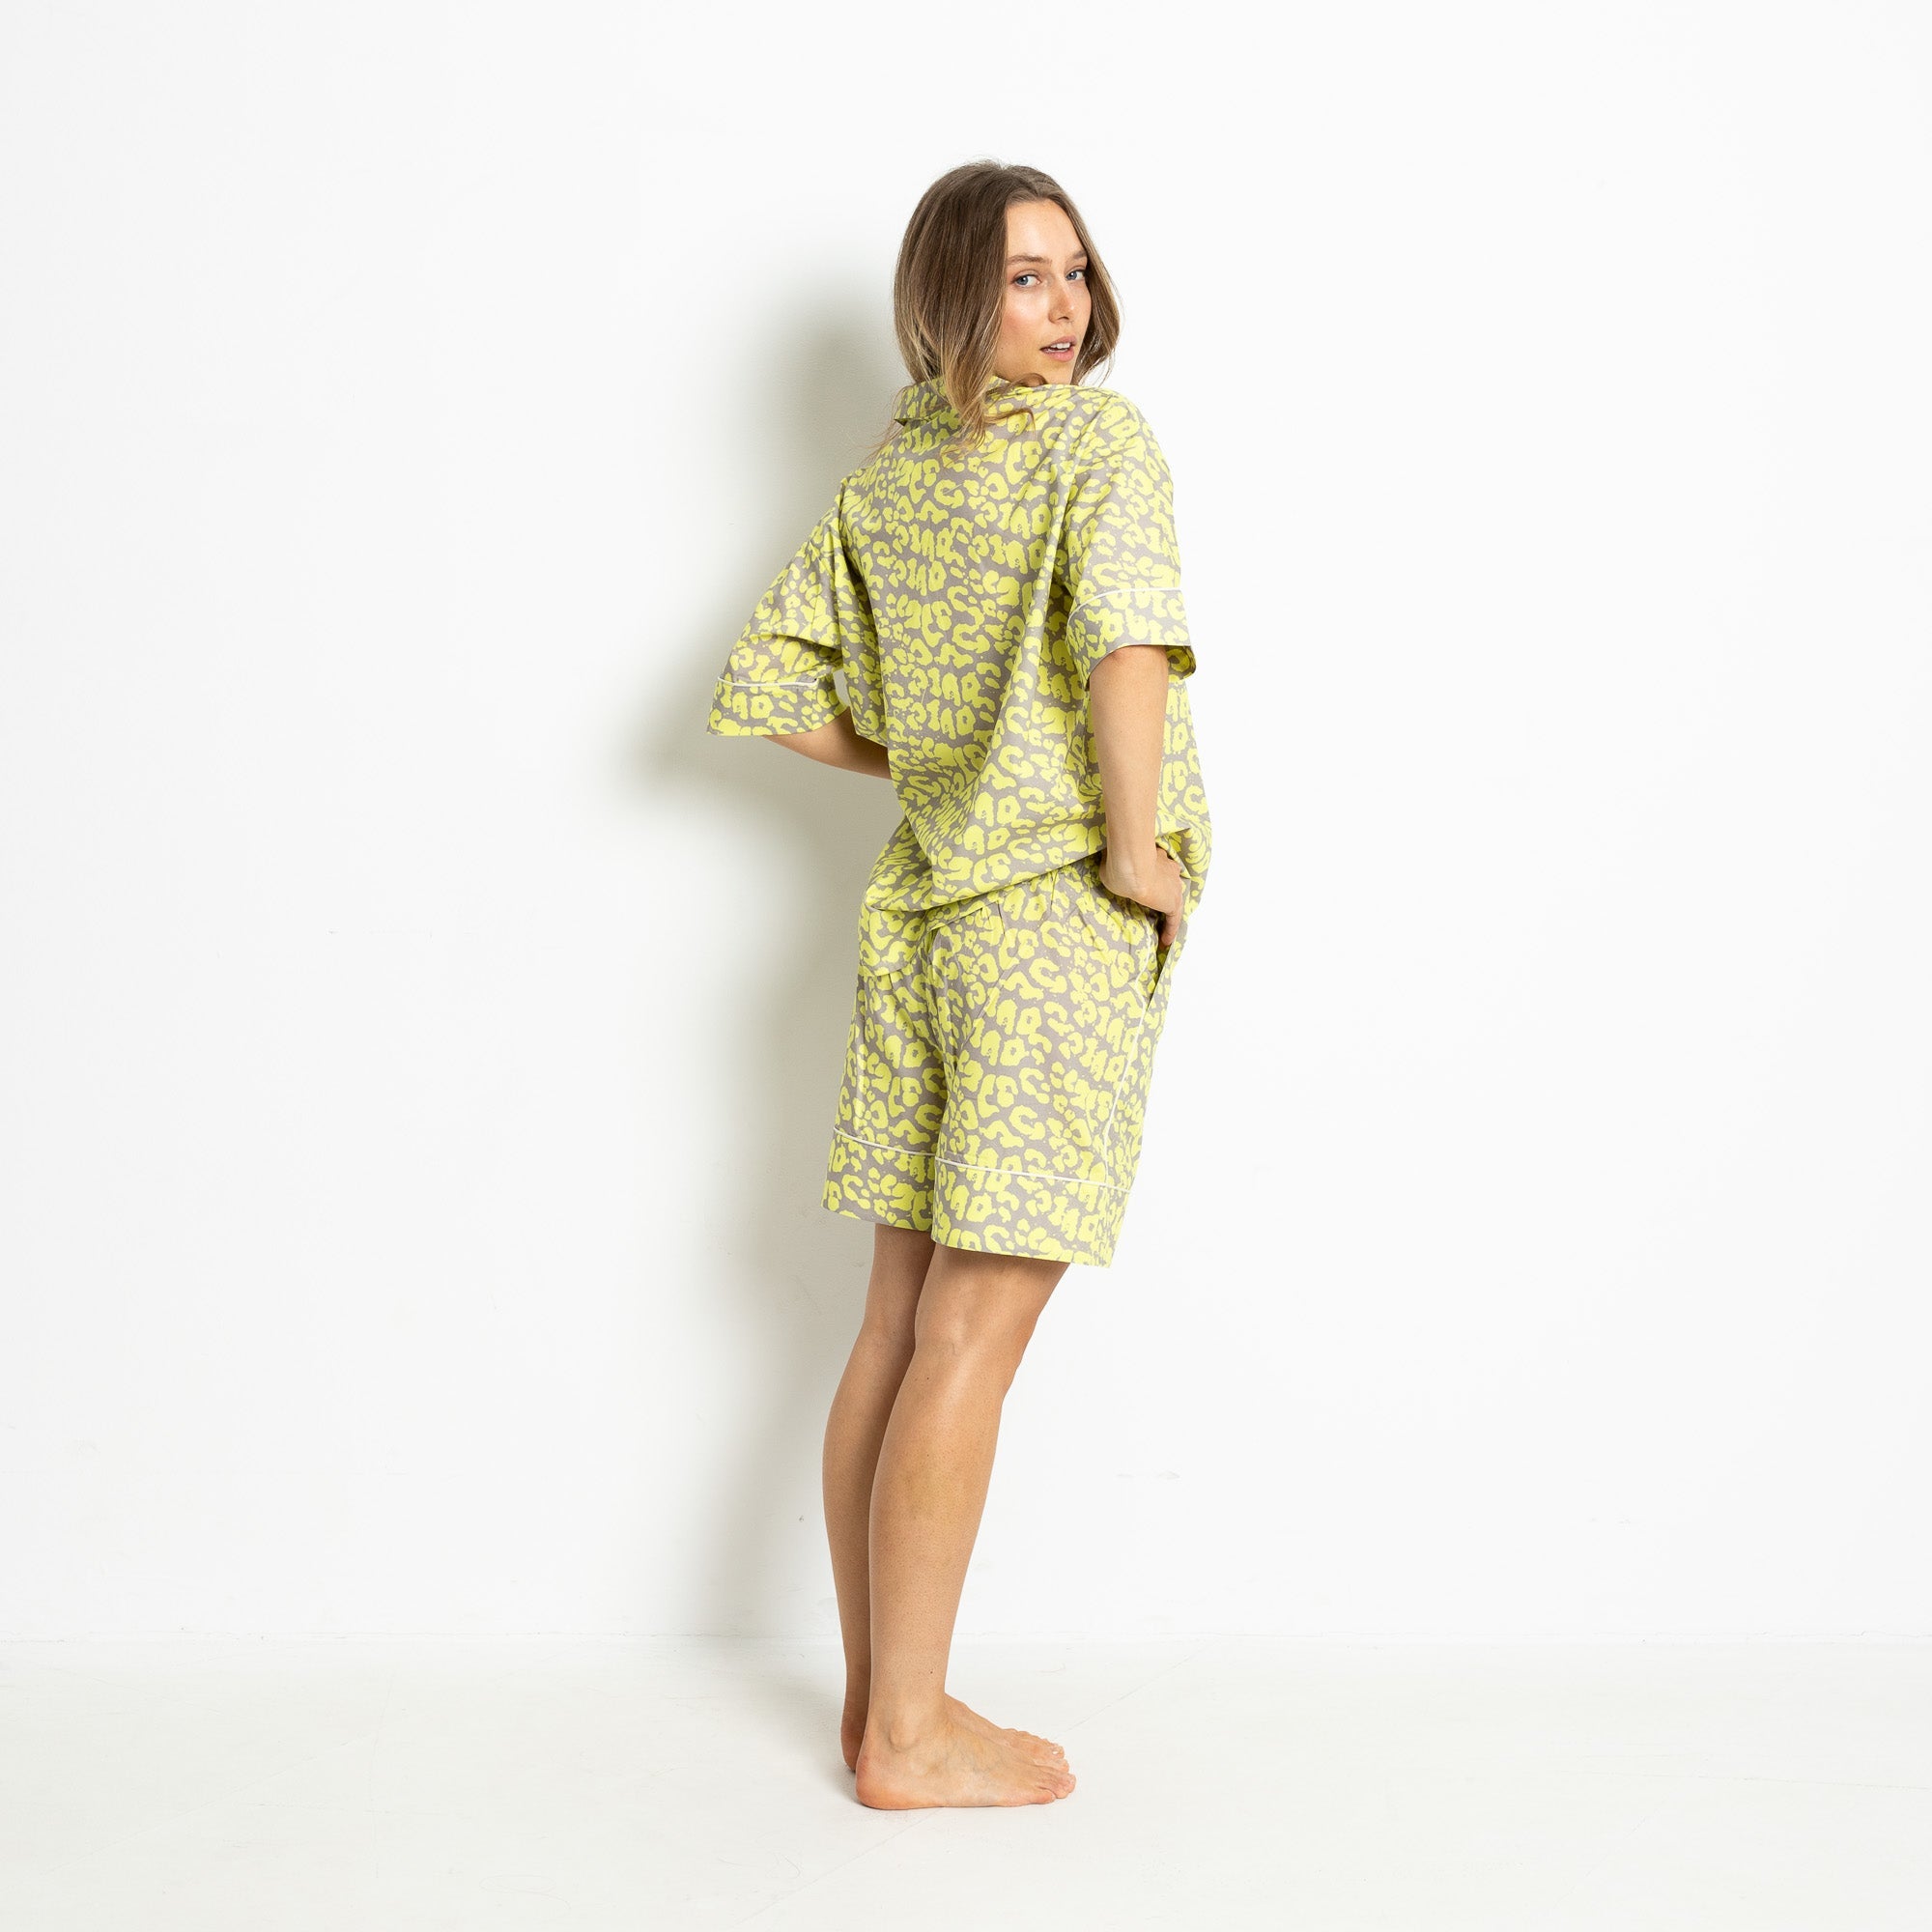 Pyjama Set (Shorts + Shirt short sleeve) - leo splashes yellow/grey - VIVI MARI